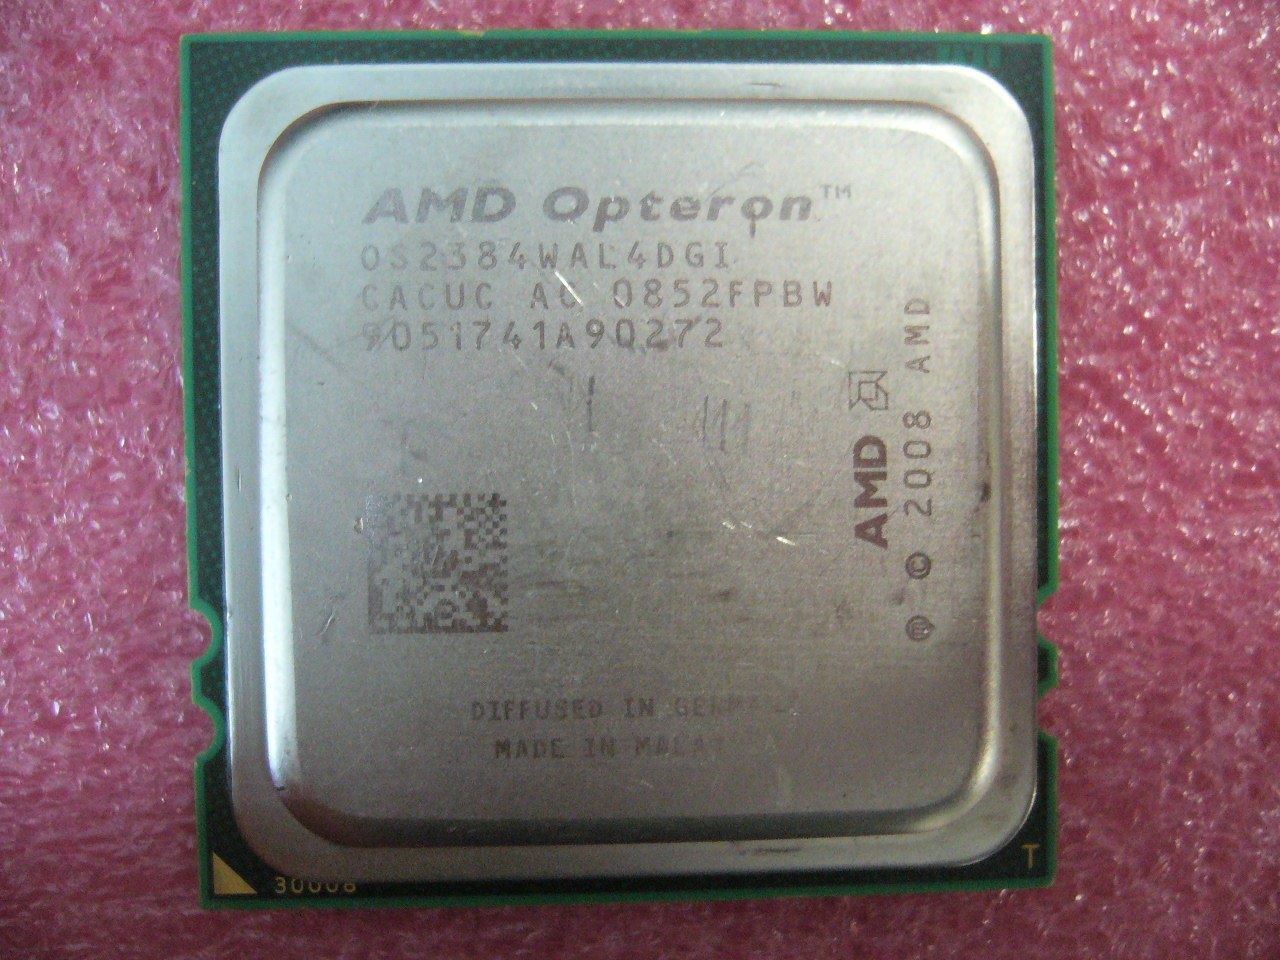 QTY 1x AMD Opteron 2384 2.7 GHz Quad-Core (OS2384WAL4DGI) CPU Socket F 1207